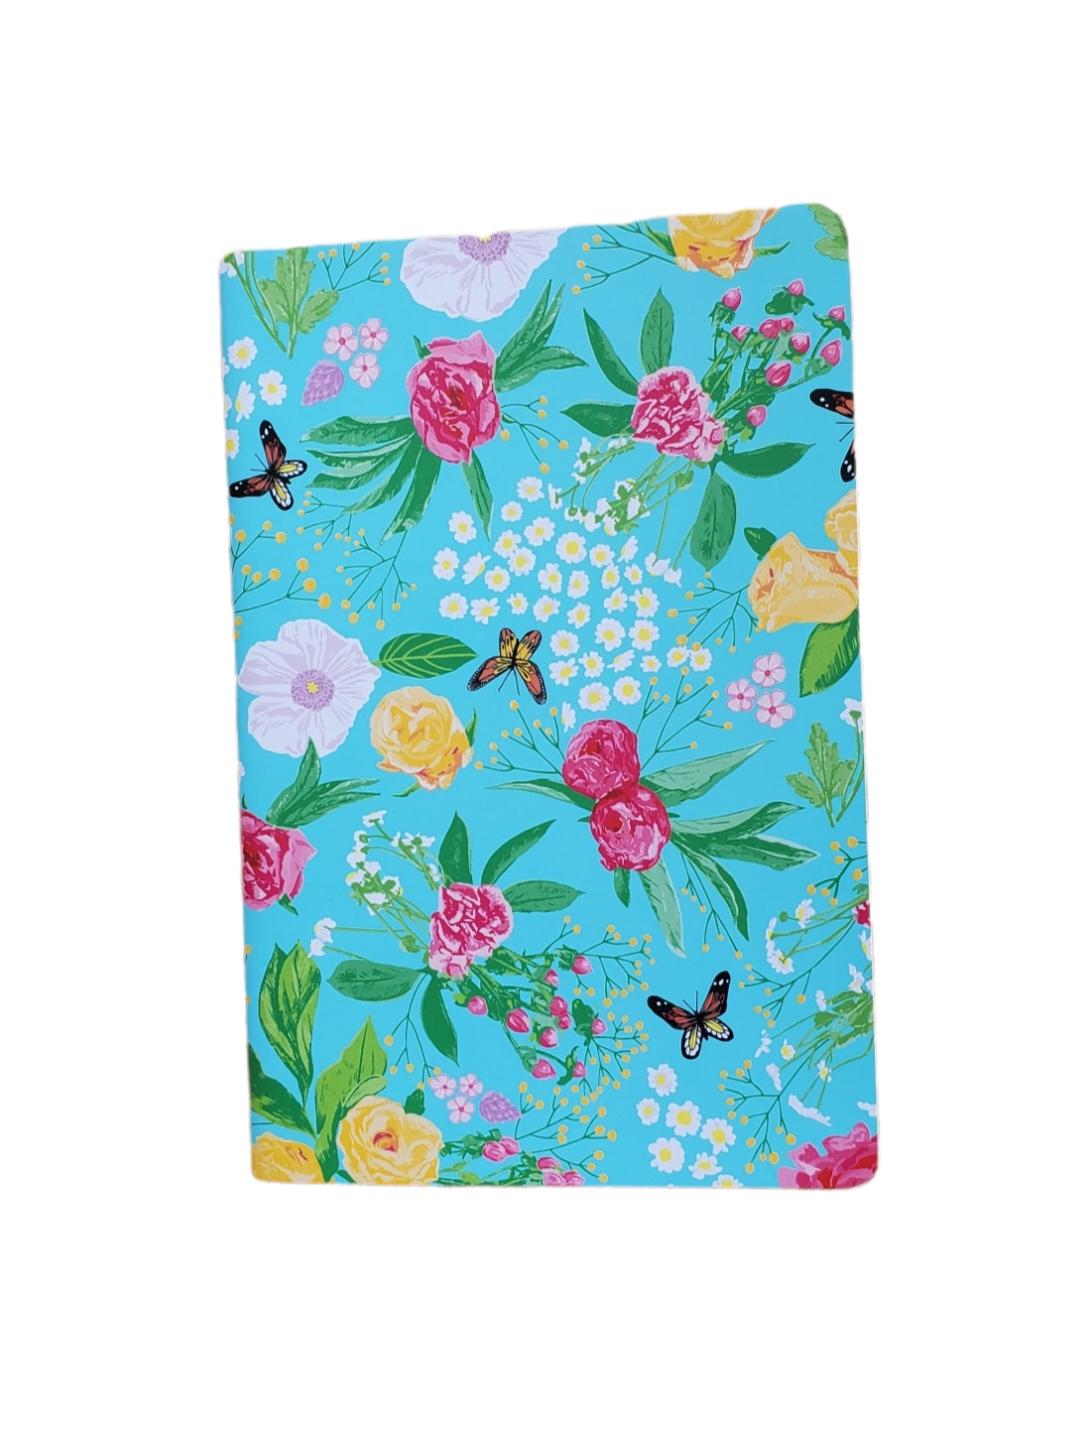 Mini Notebook - Blue Floral